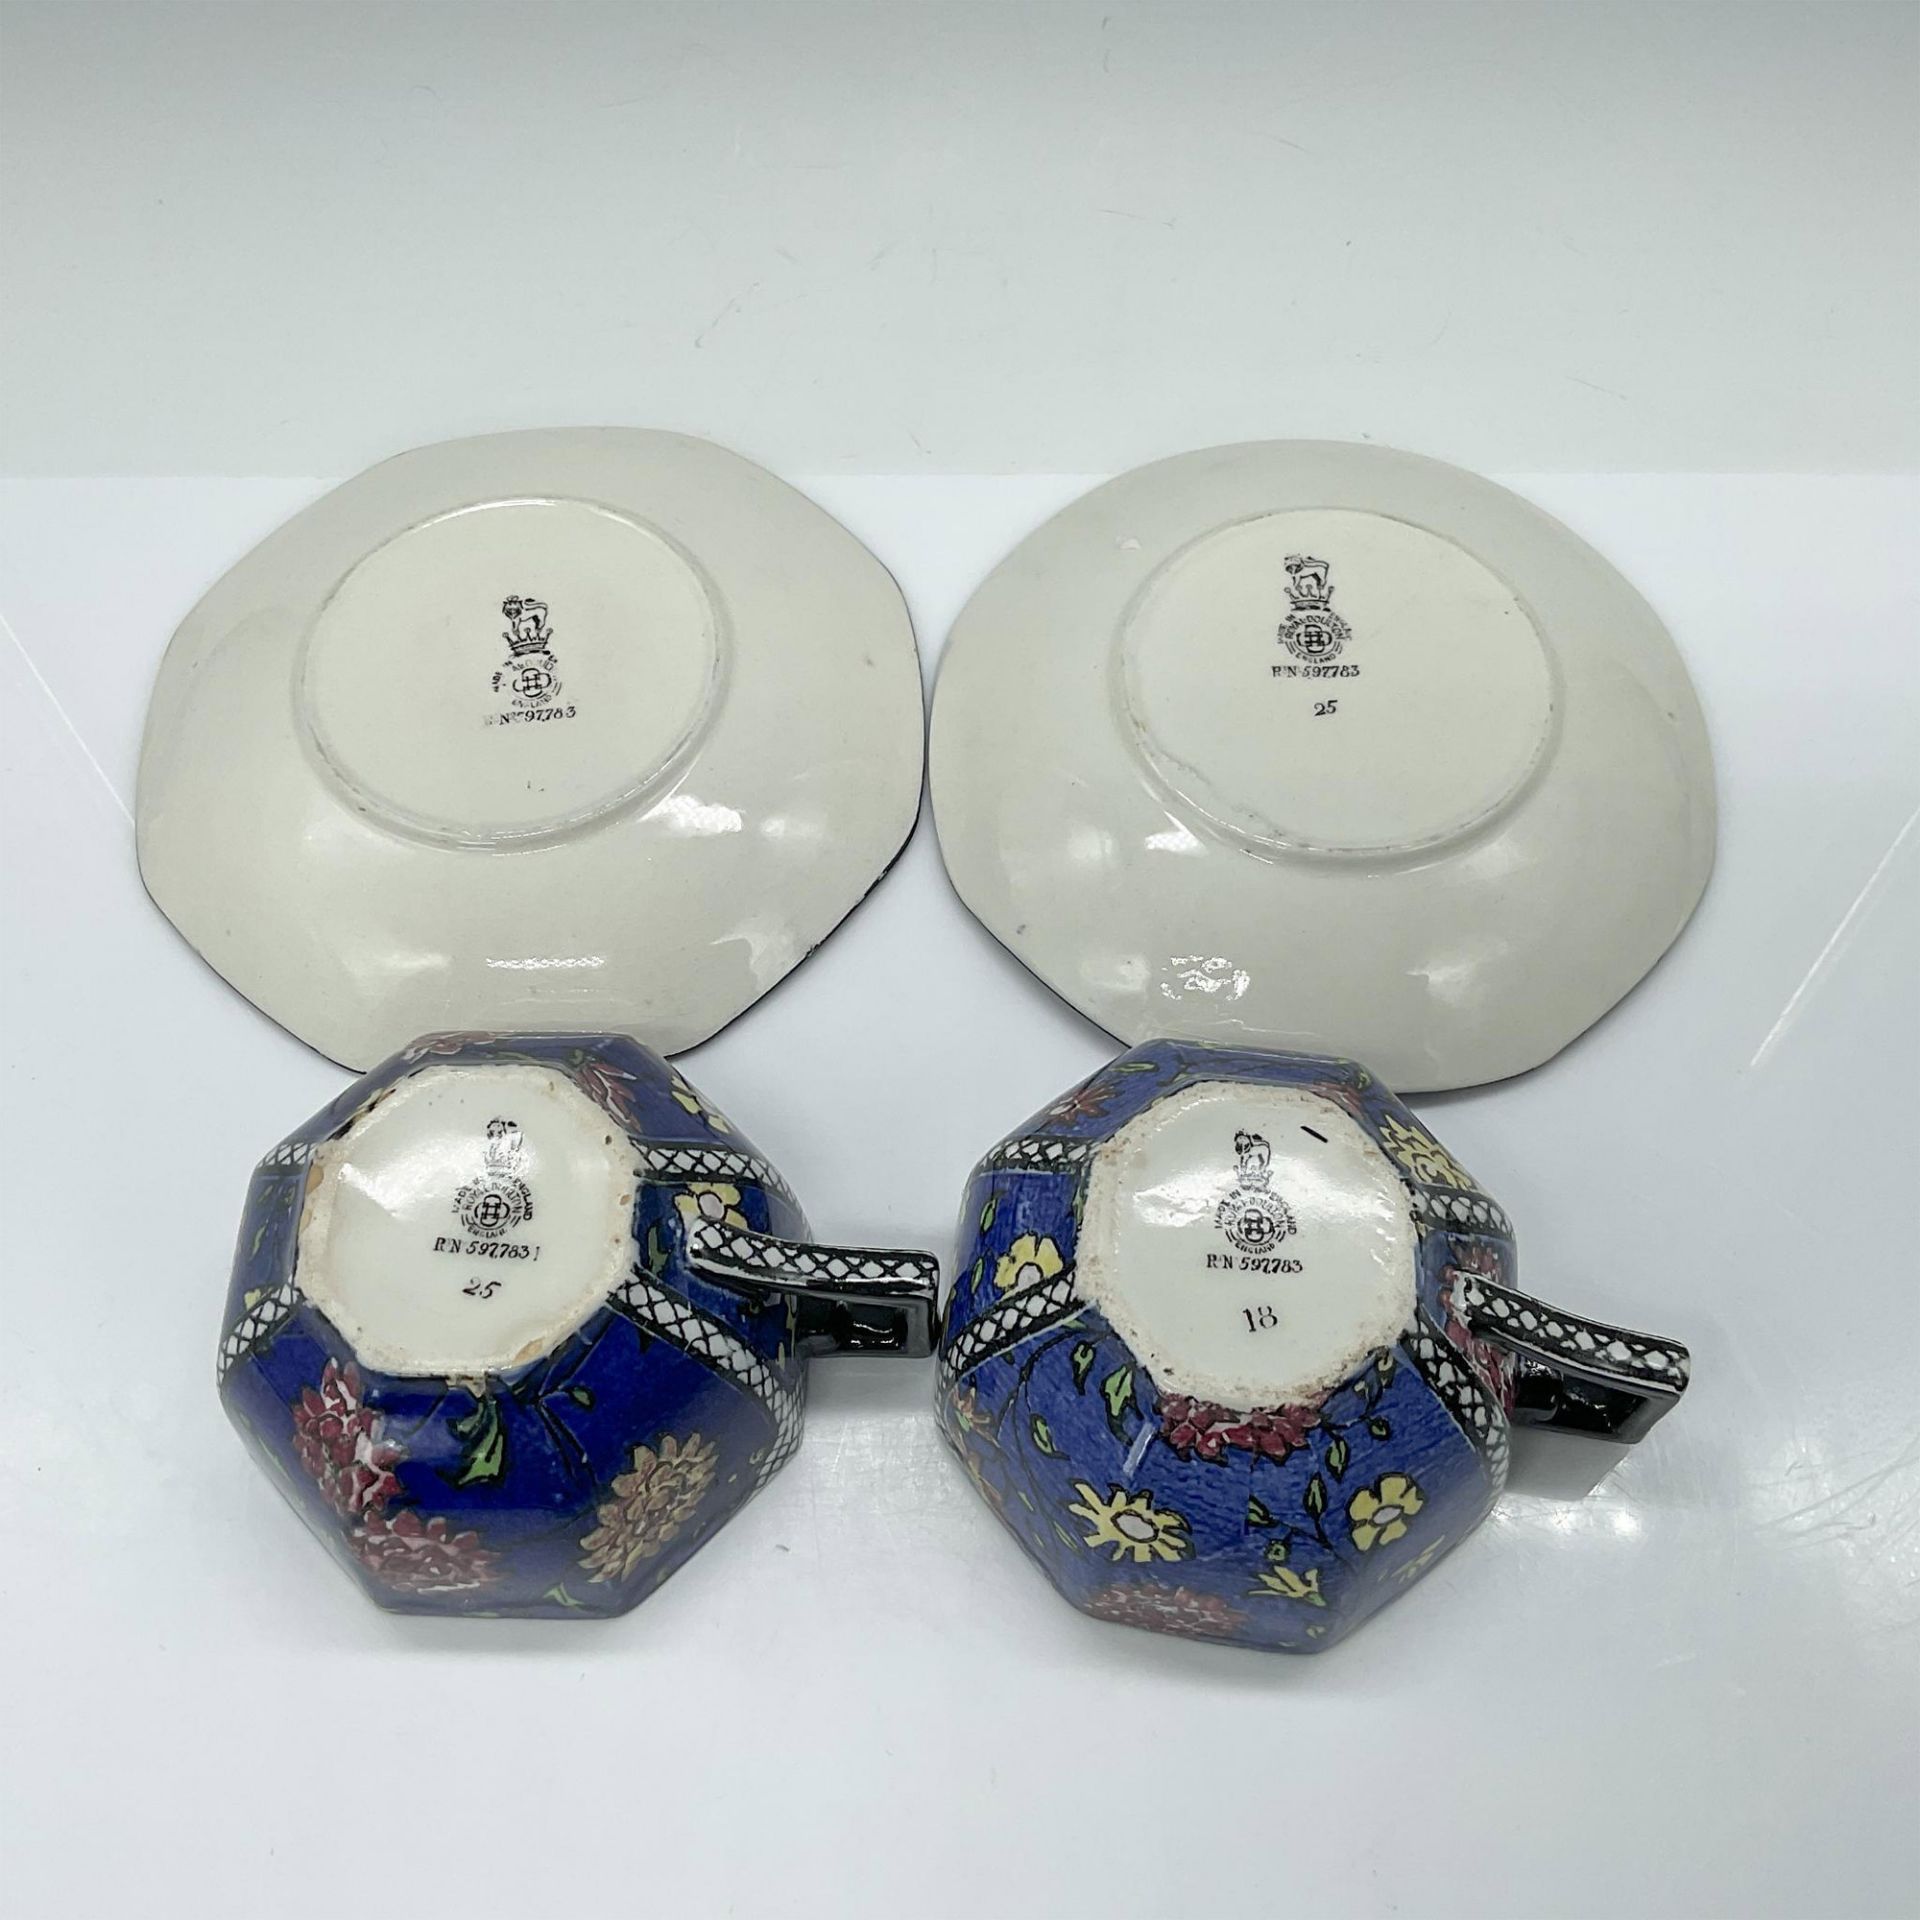 4pc Royal Doulton Teacup & Saucer Set, Persian Anemone - Image 3 of 3